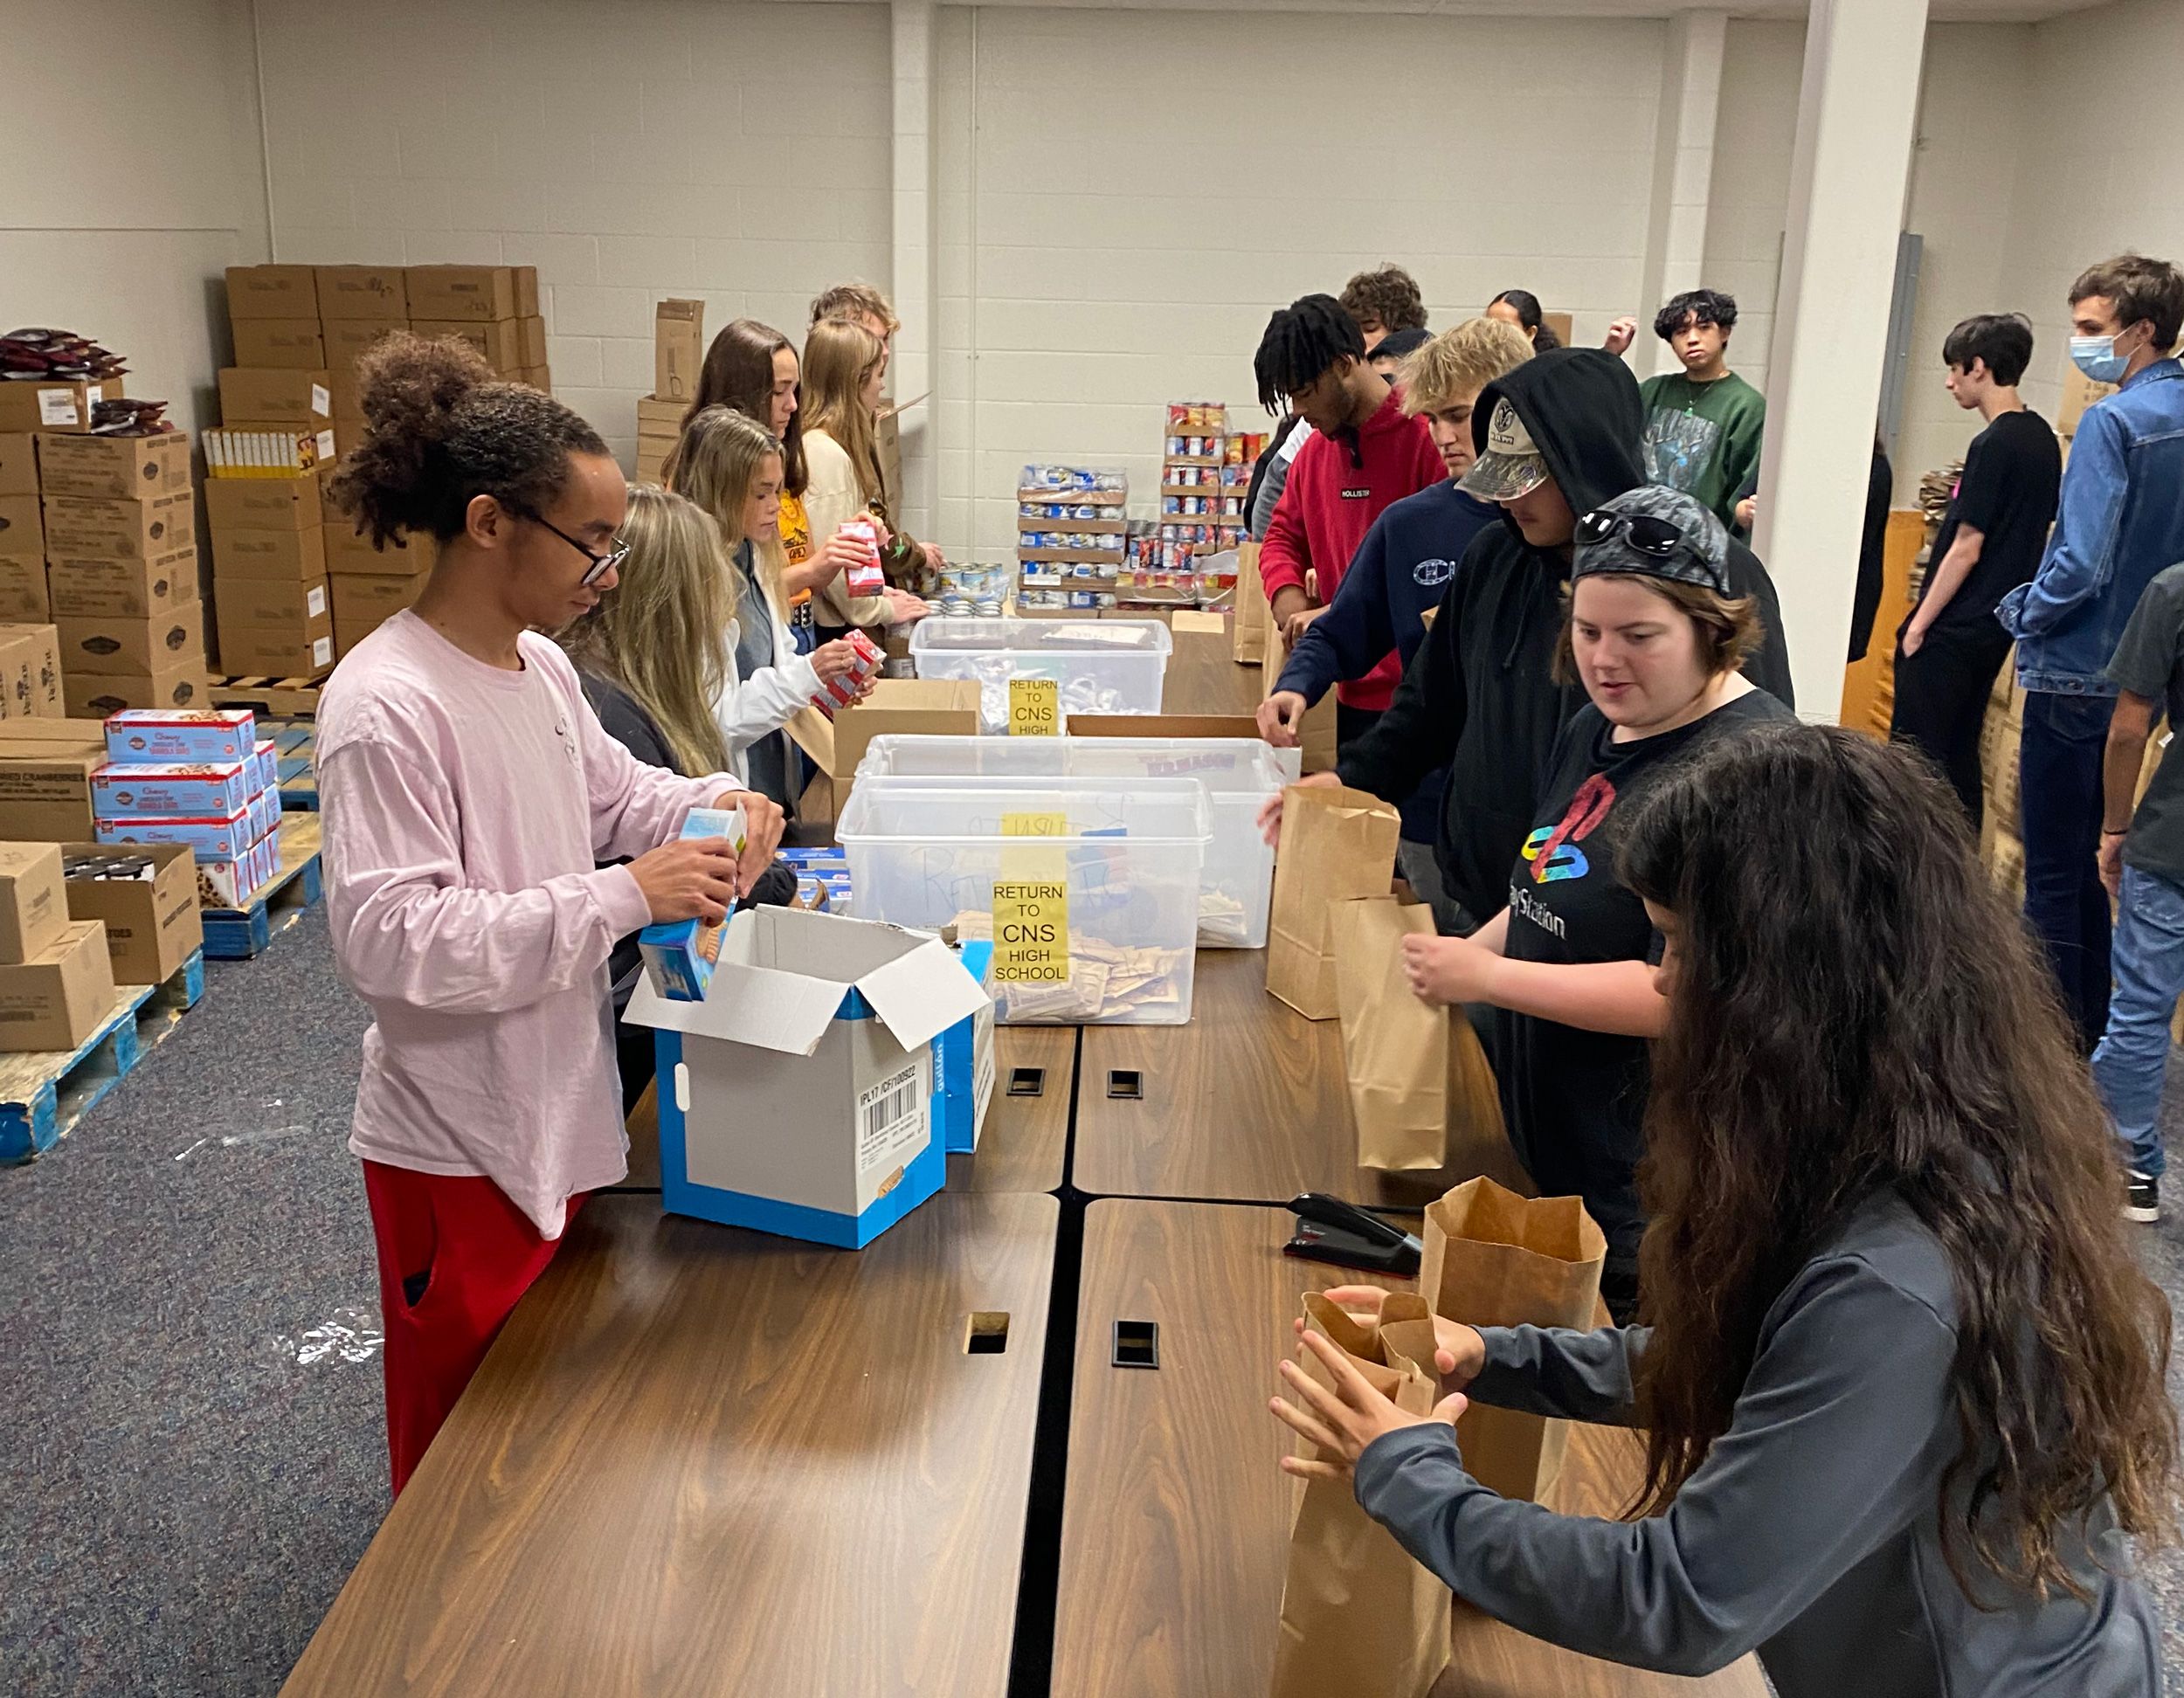 Students feeding students.